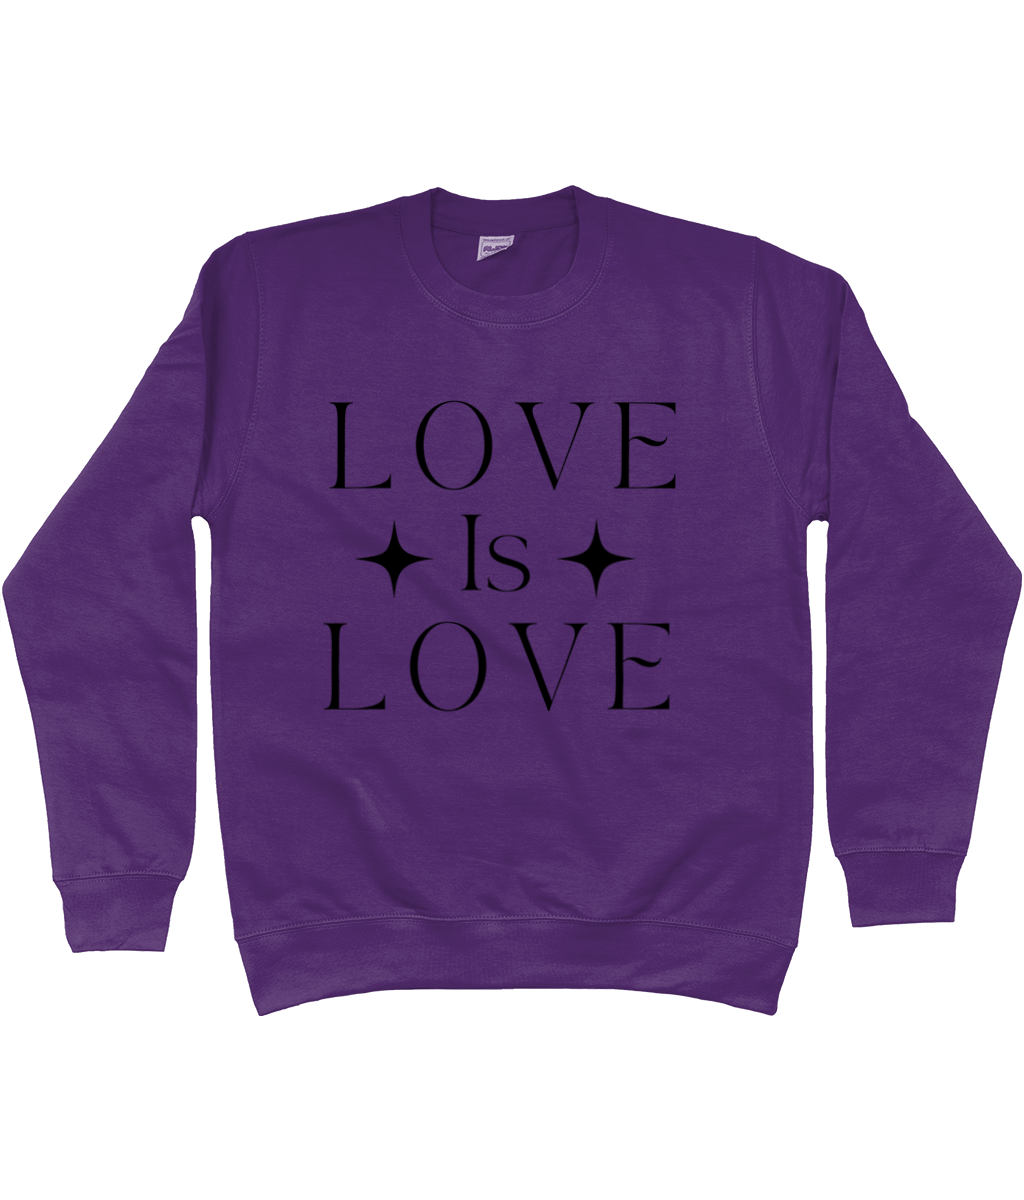 Love Is Love Kid's Sweatshirt